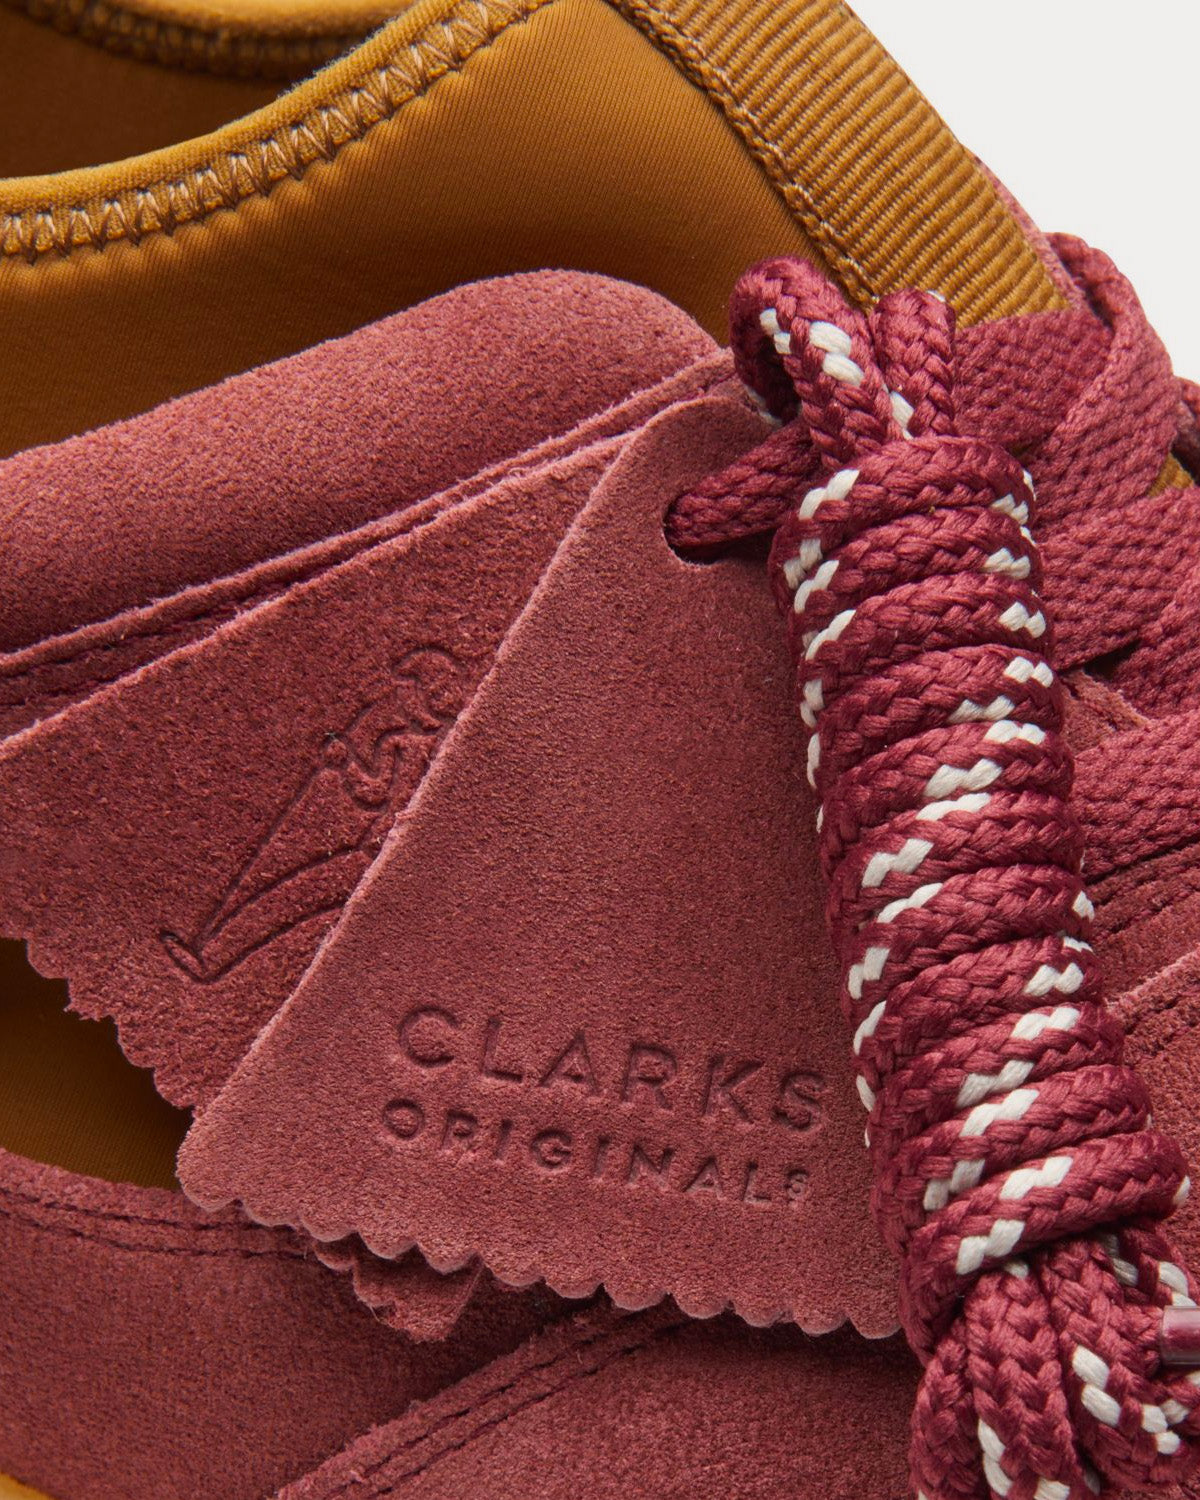 Clarks x Kith - Breacon Oxblood / Oakmoss High Top Sneakers